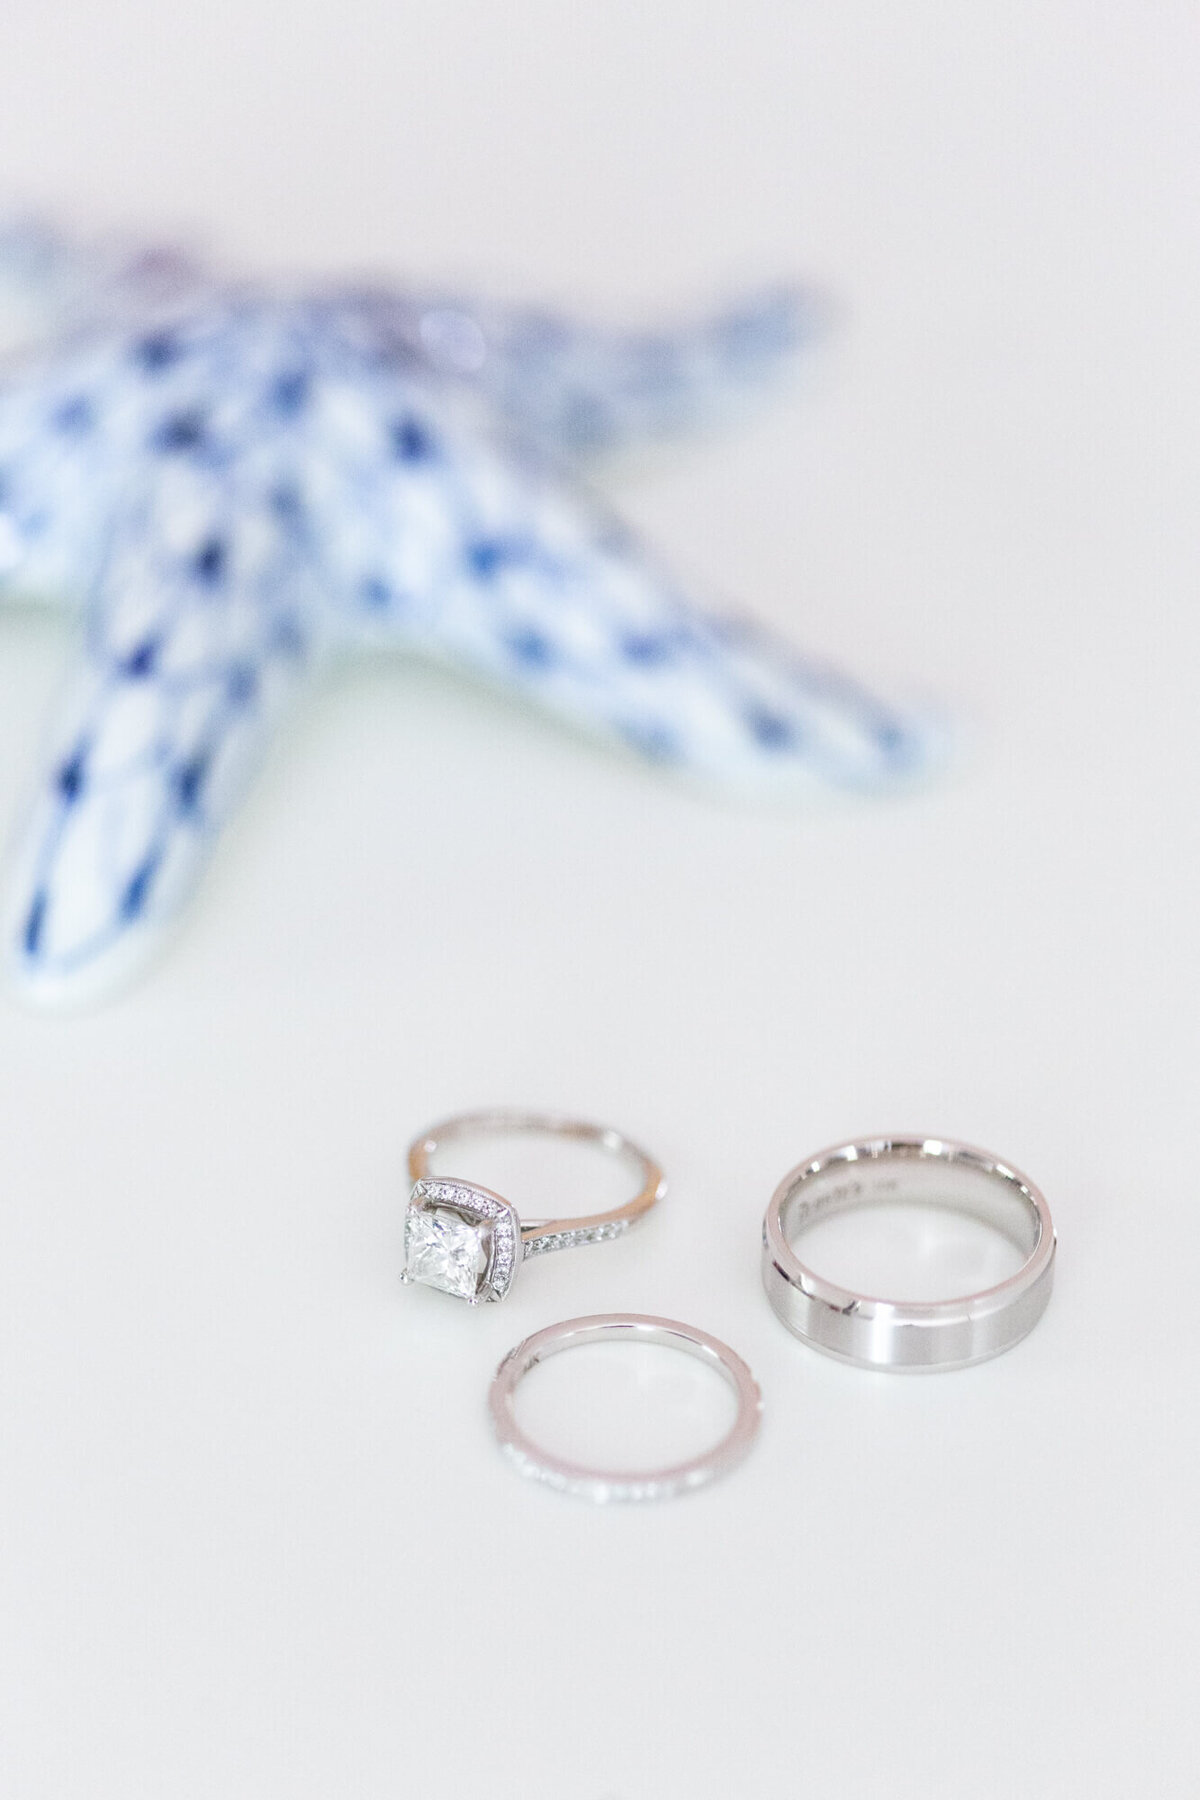 rings-engagement-ring-starfish-blue.jpg